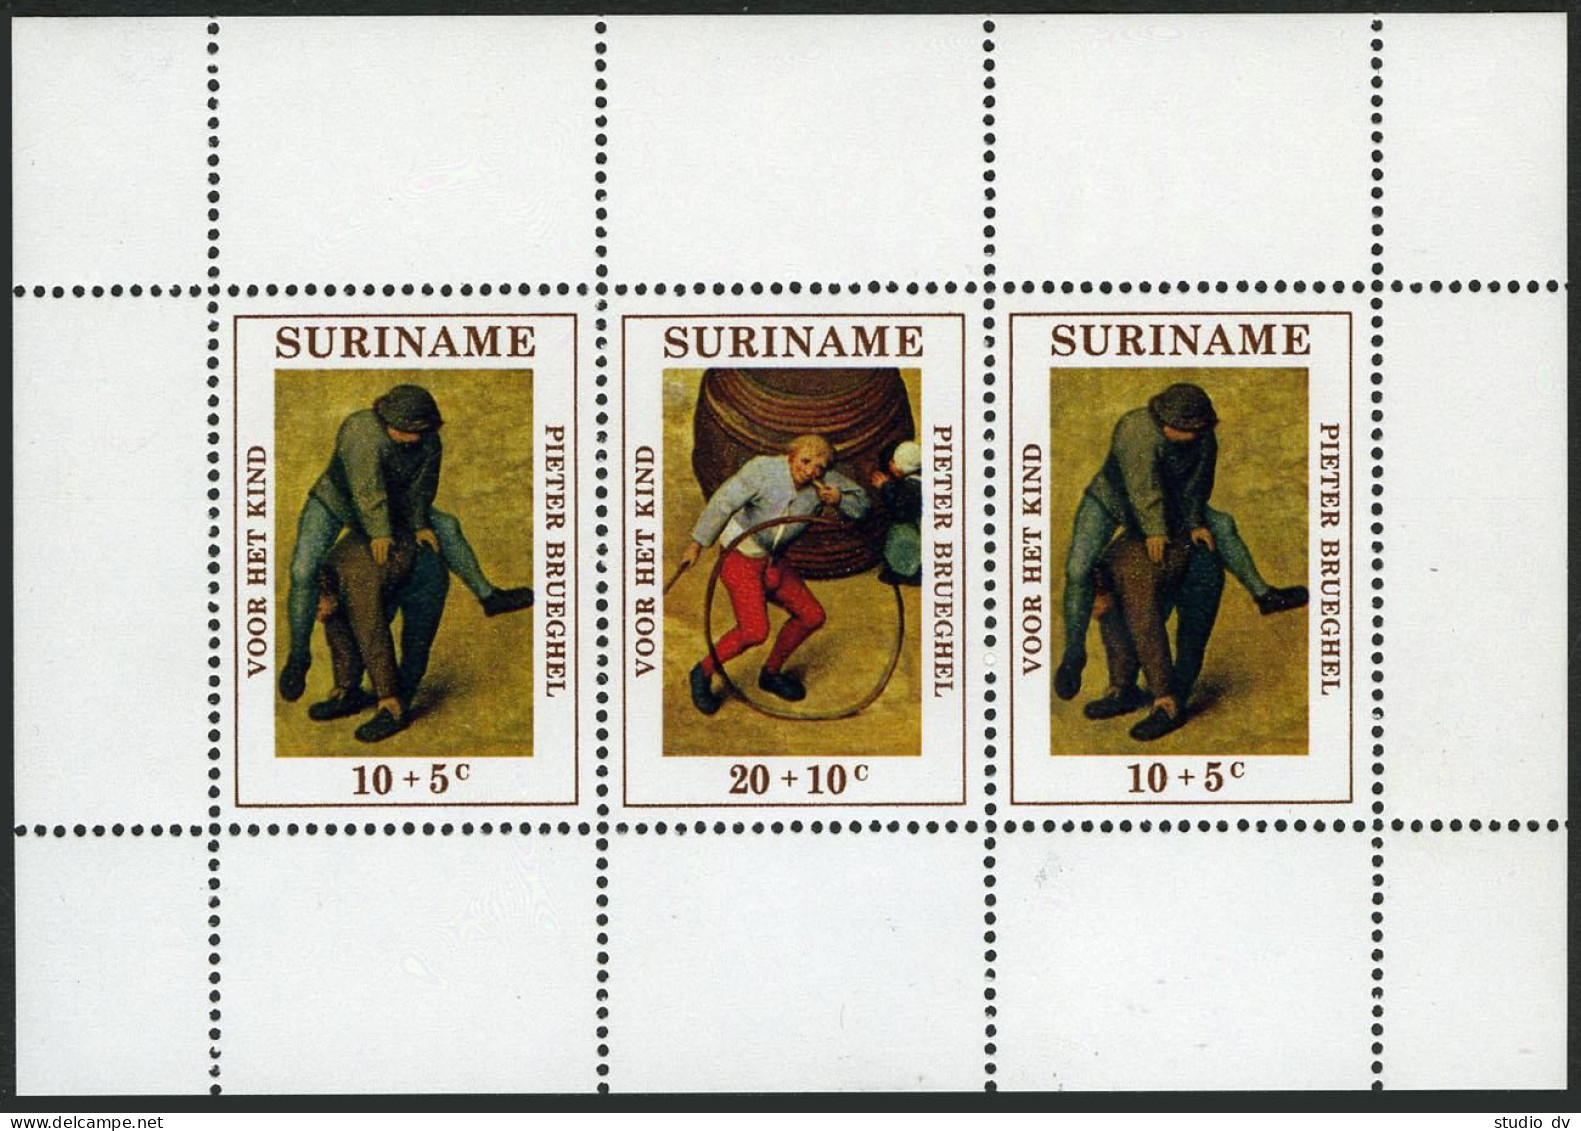 Surinam B179a Sheet, MNH. Michel Bl.11. Children Games By Peter Brueghel, 1971 - Suriname